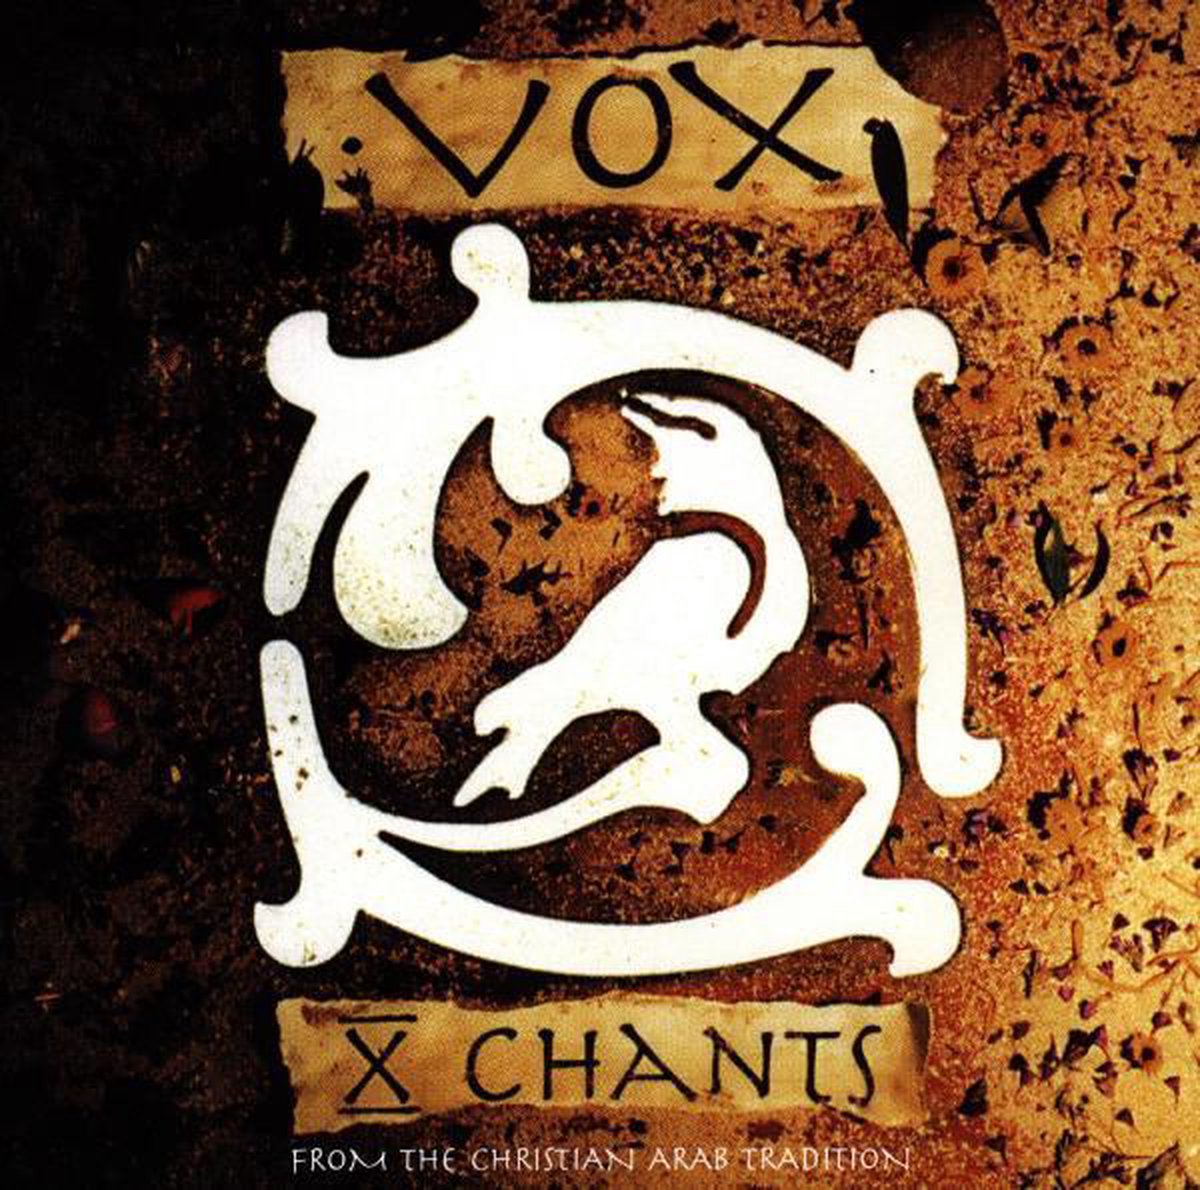 X-Chants - Vox